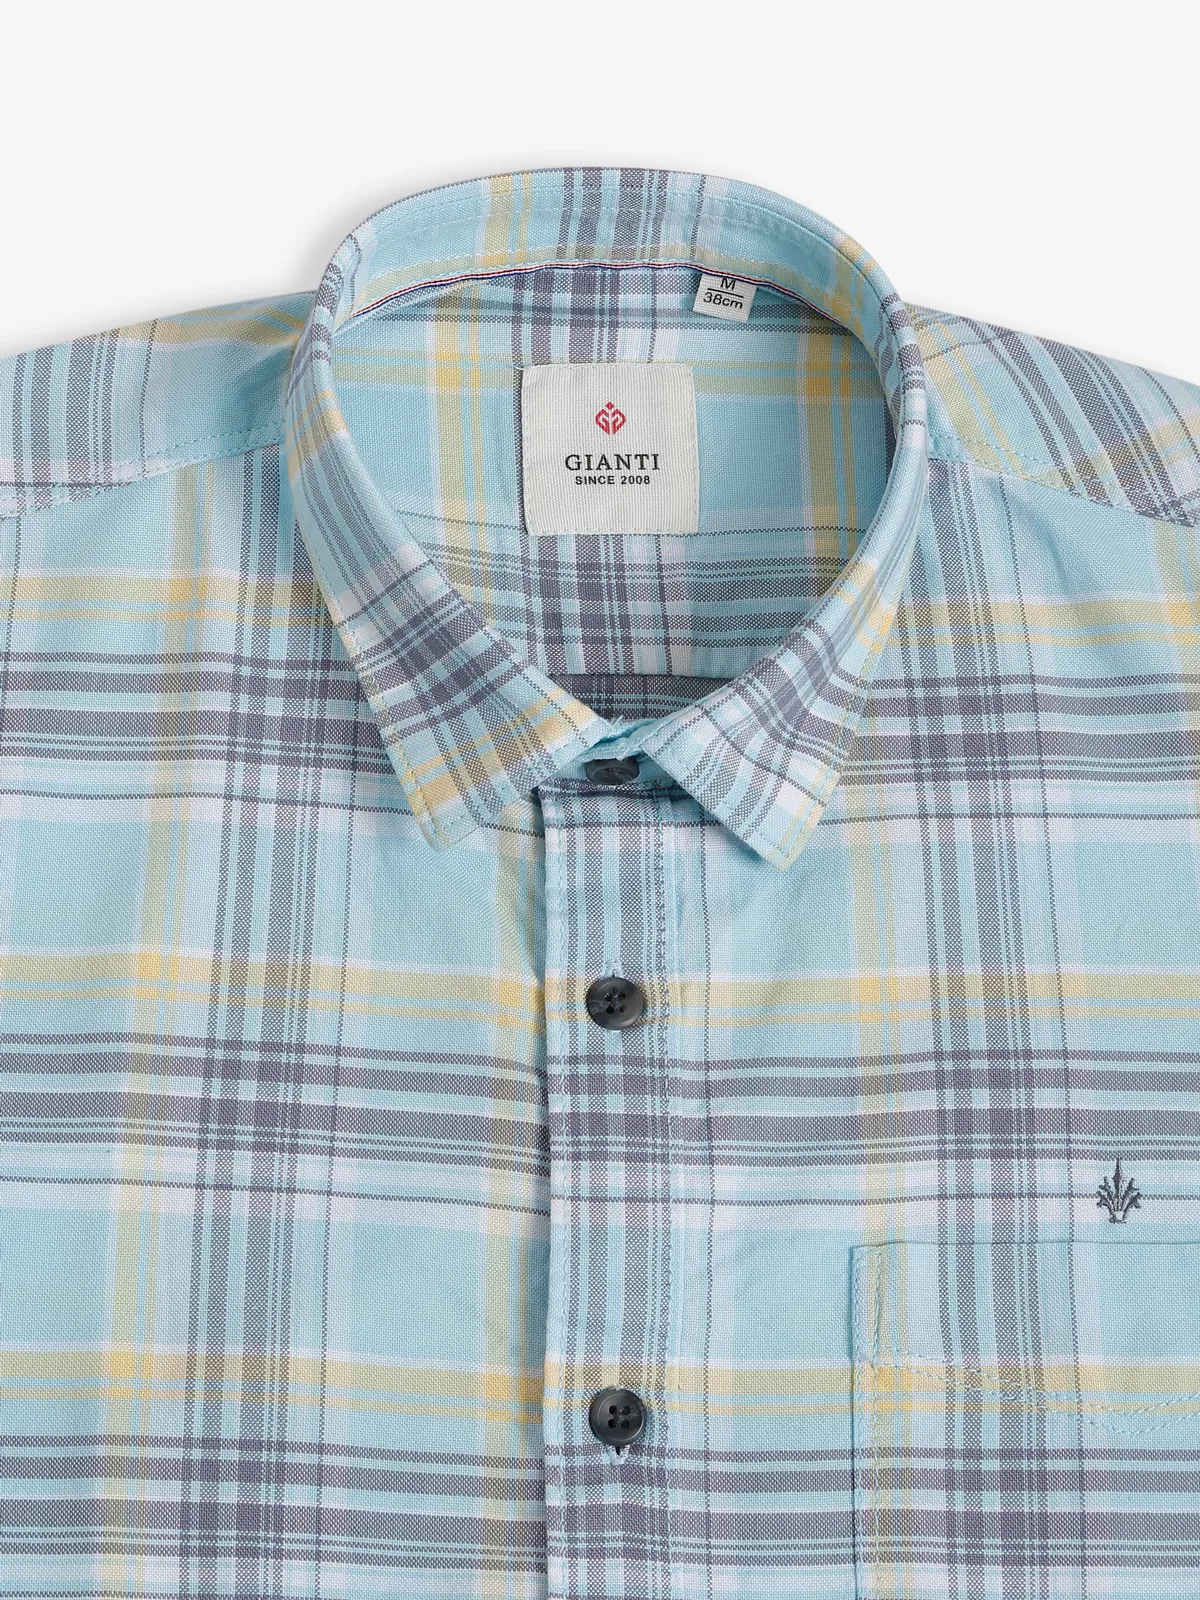 Gianti cotton sky blue checks shirt